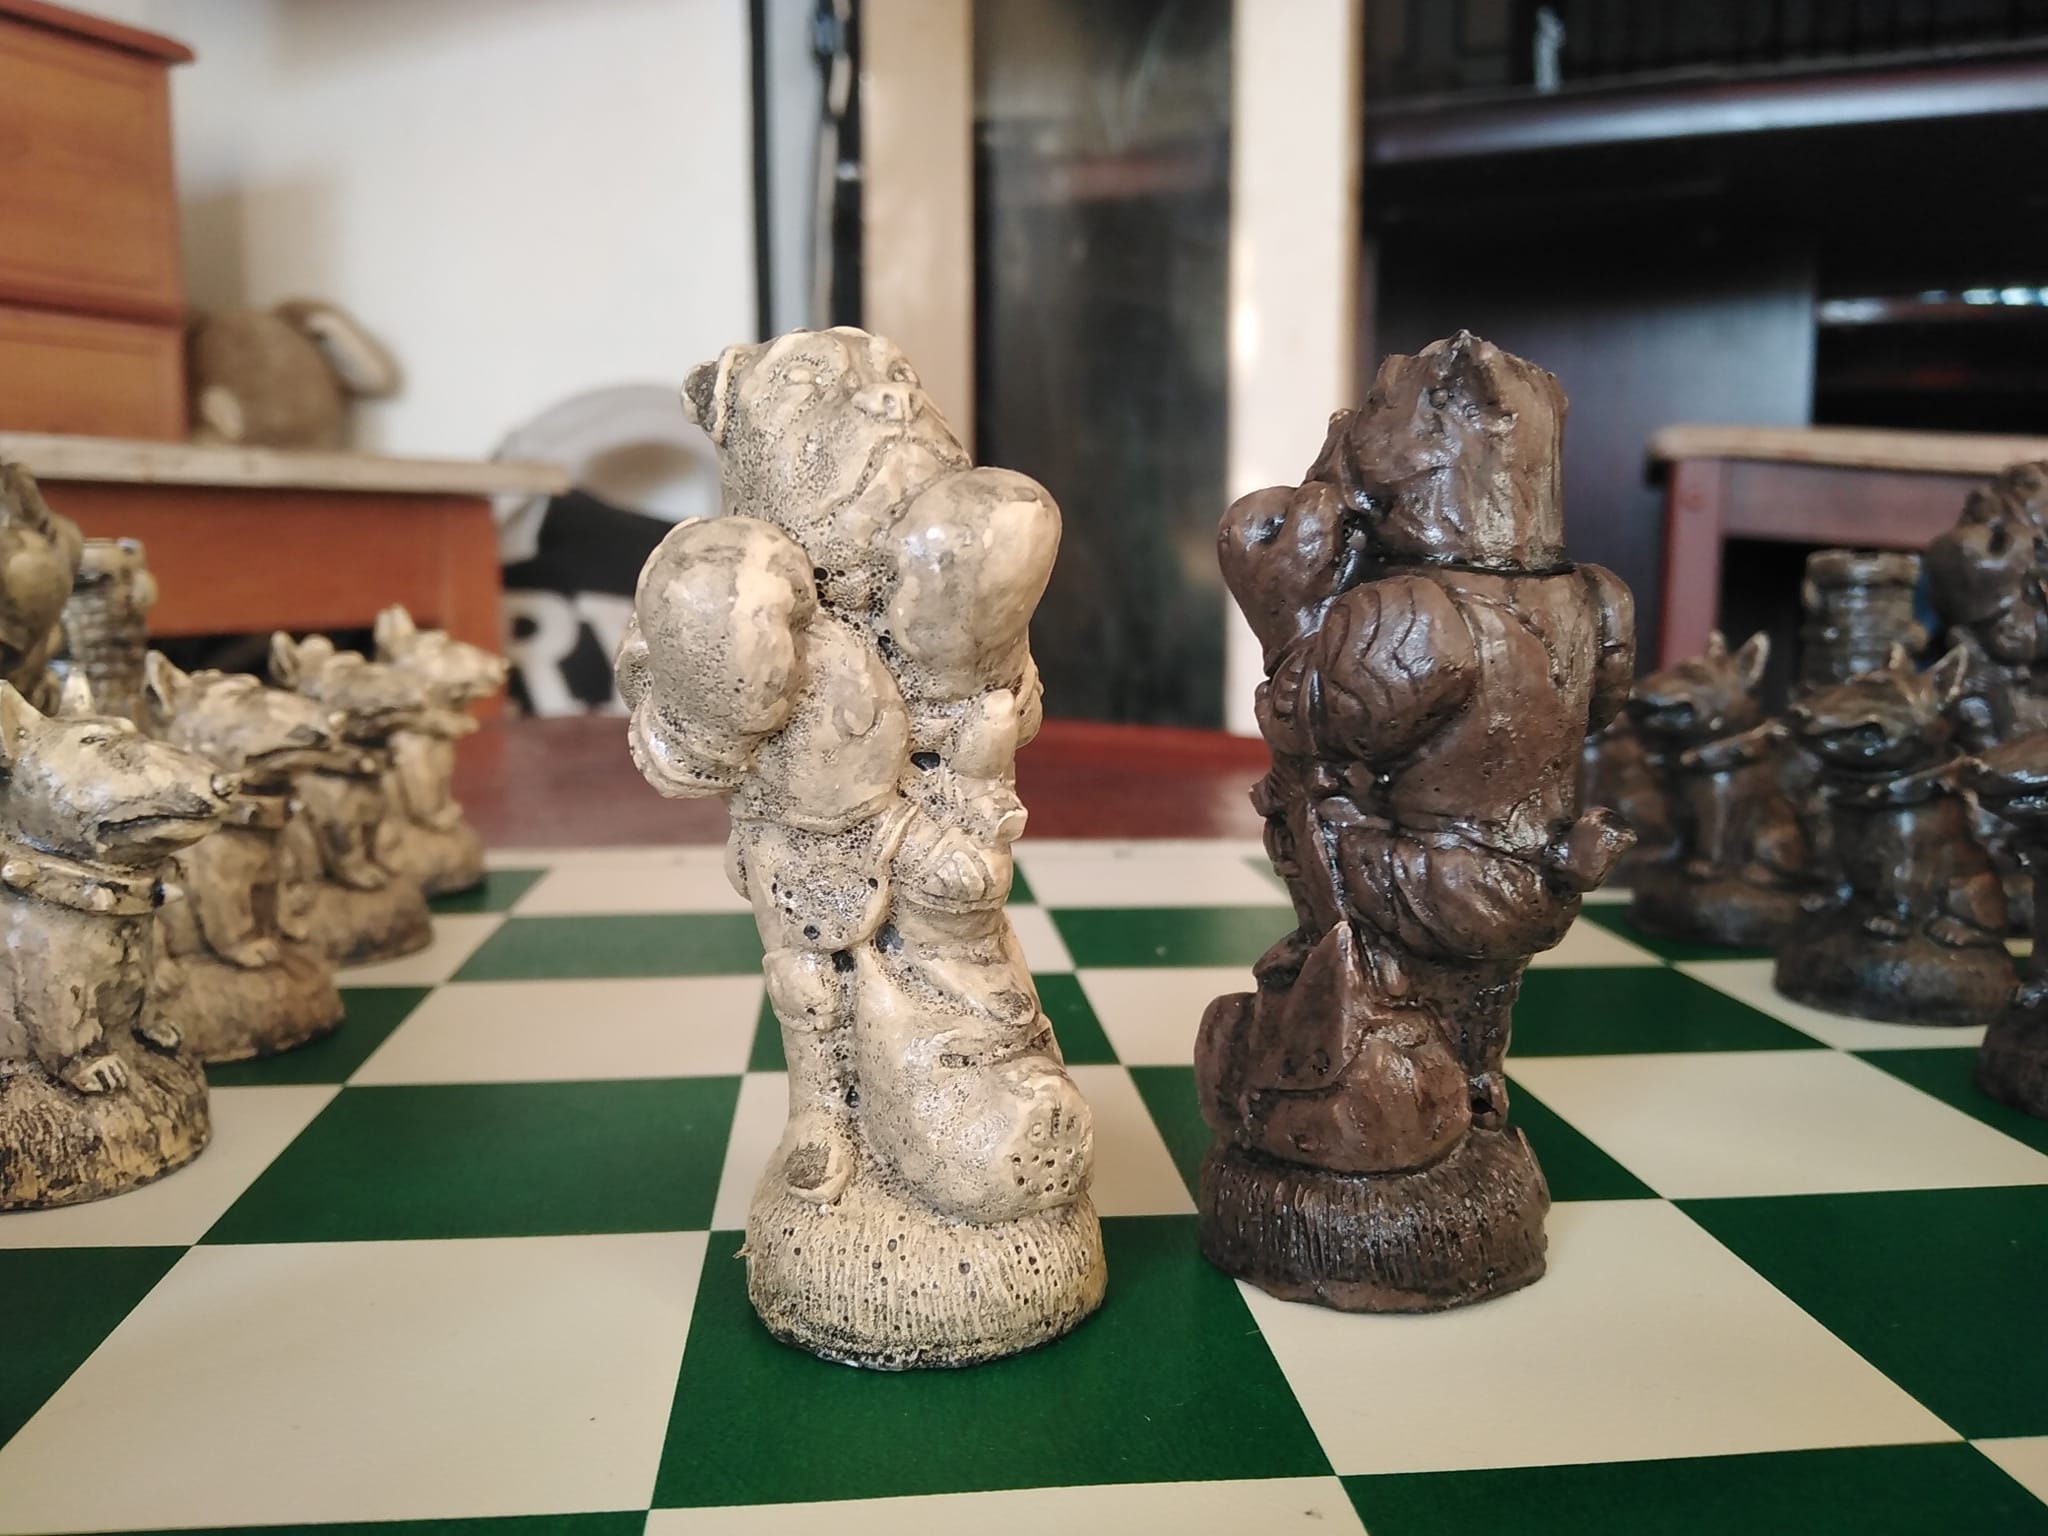 More Bulldog Chess Templates - Chess Forums 